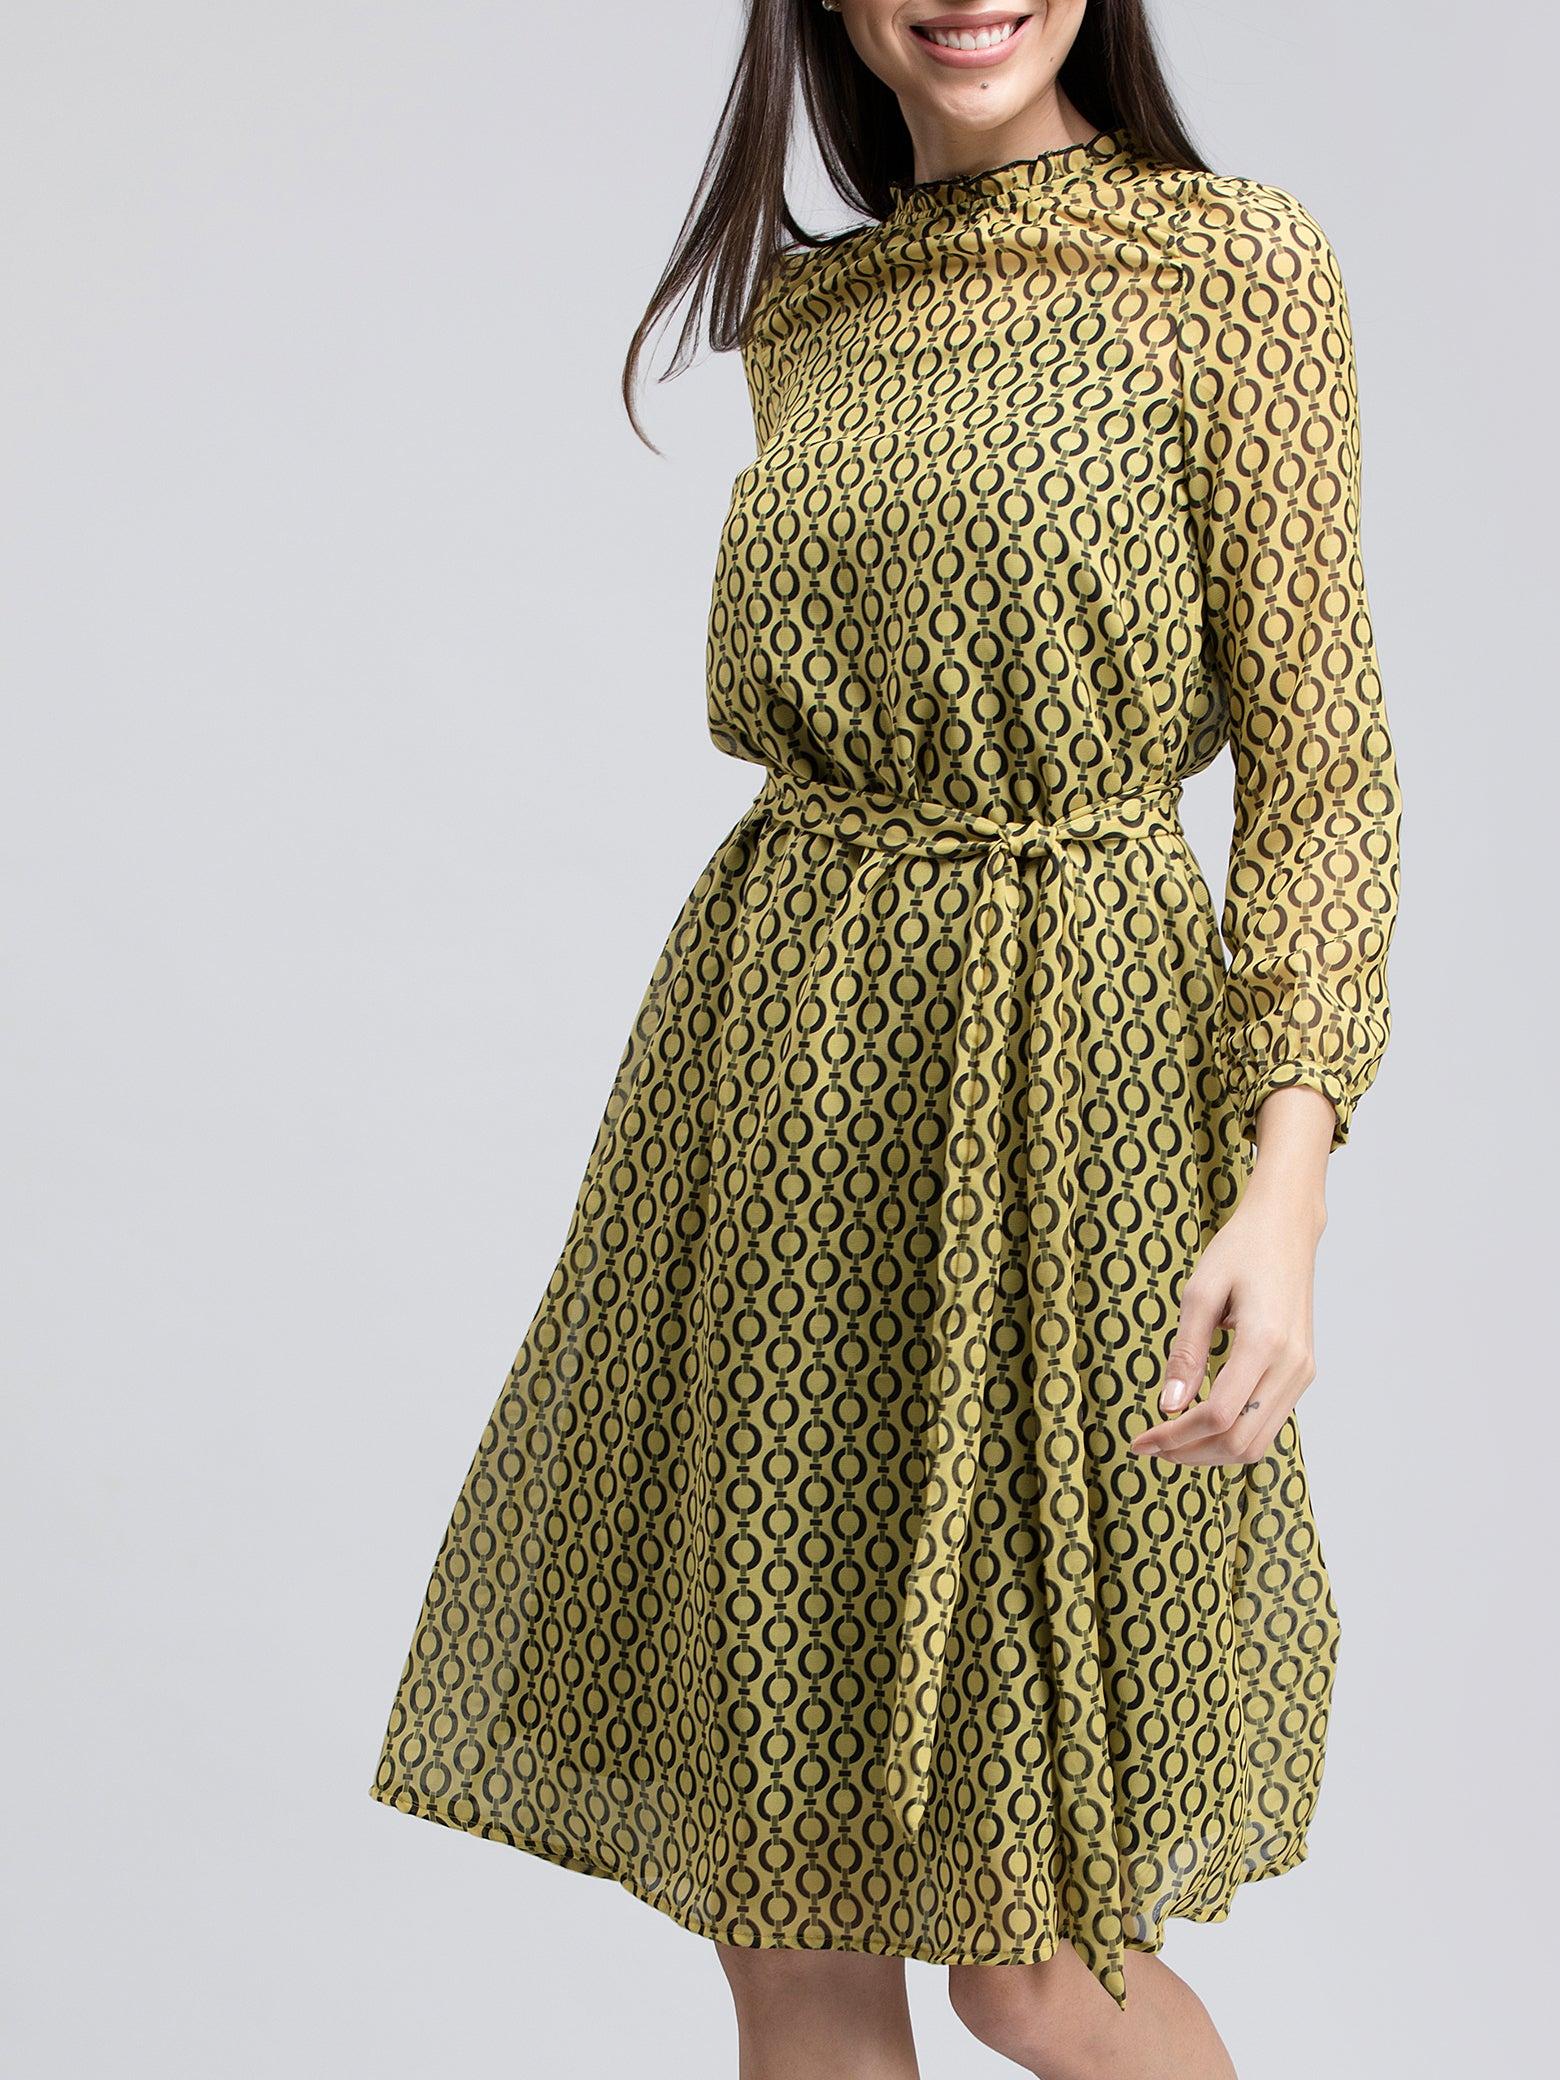 Geometric Print Ruffled A Line Dress - Yellow and Black| Formal Dresses